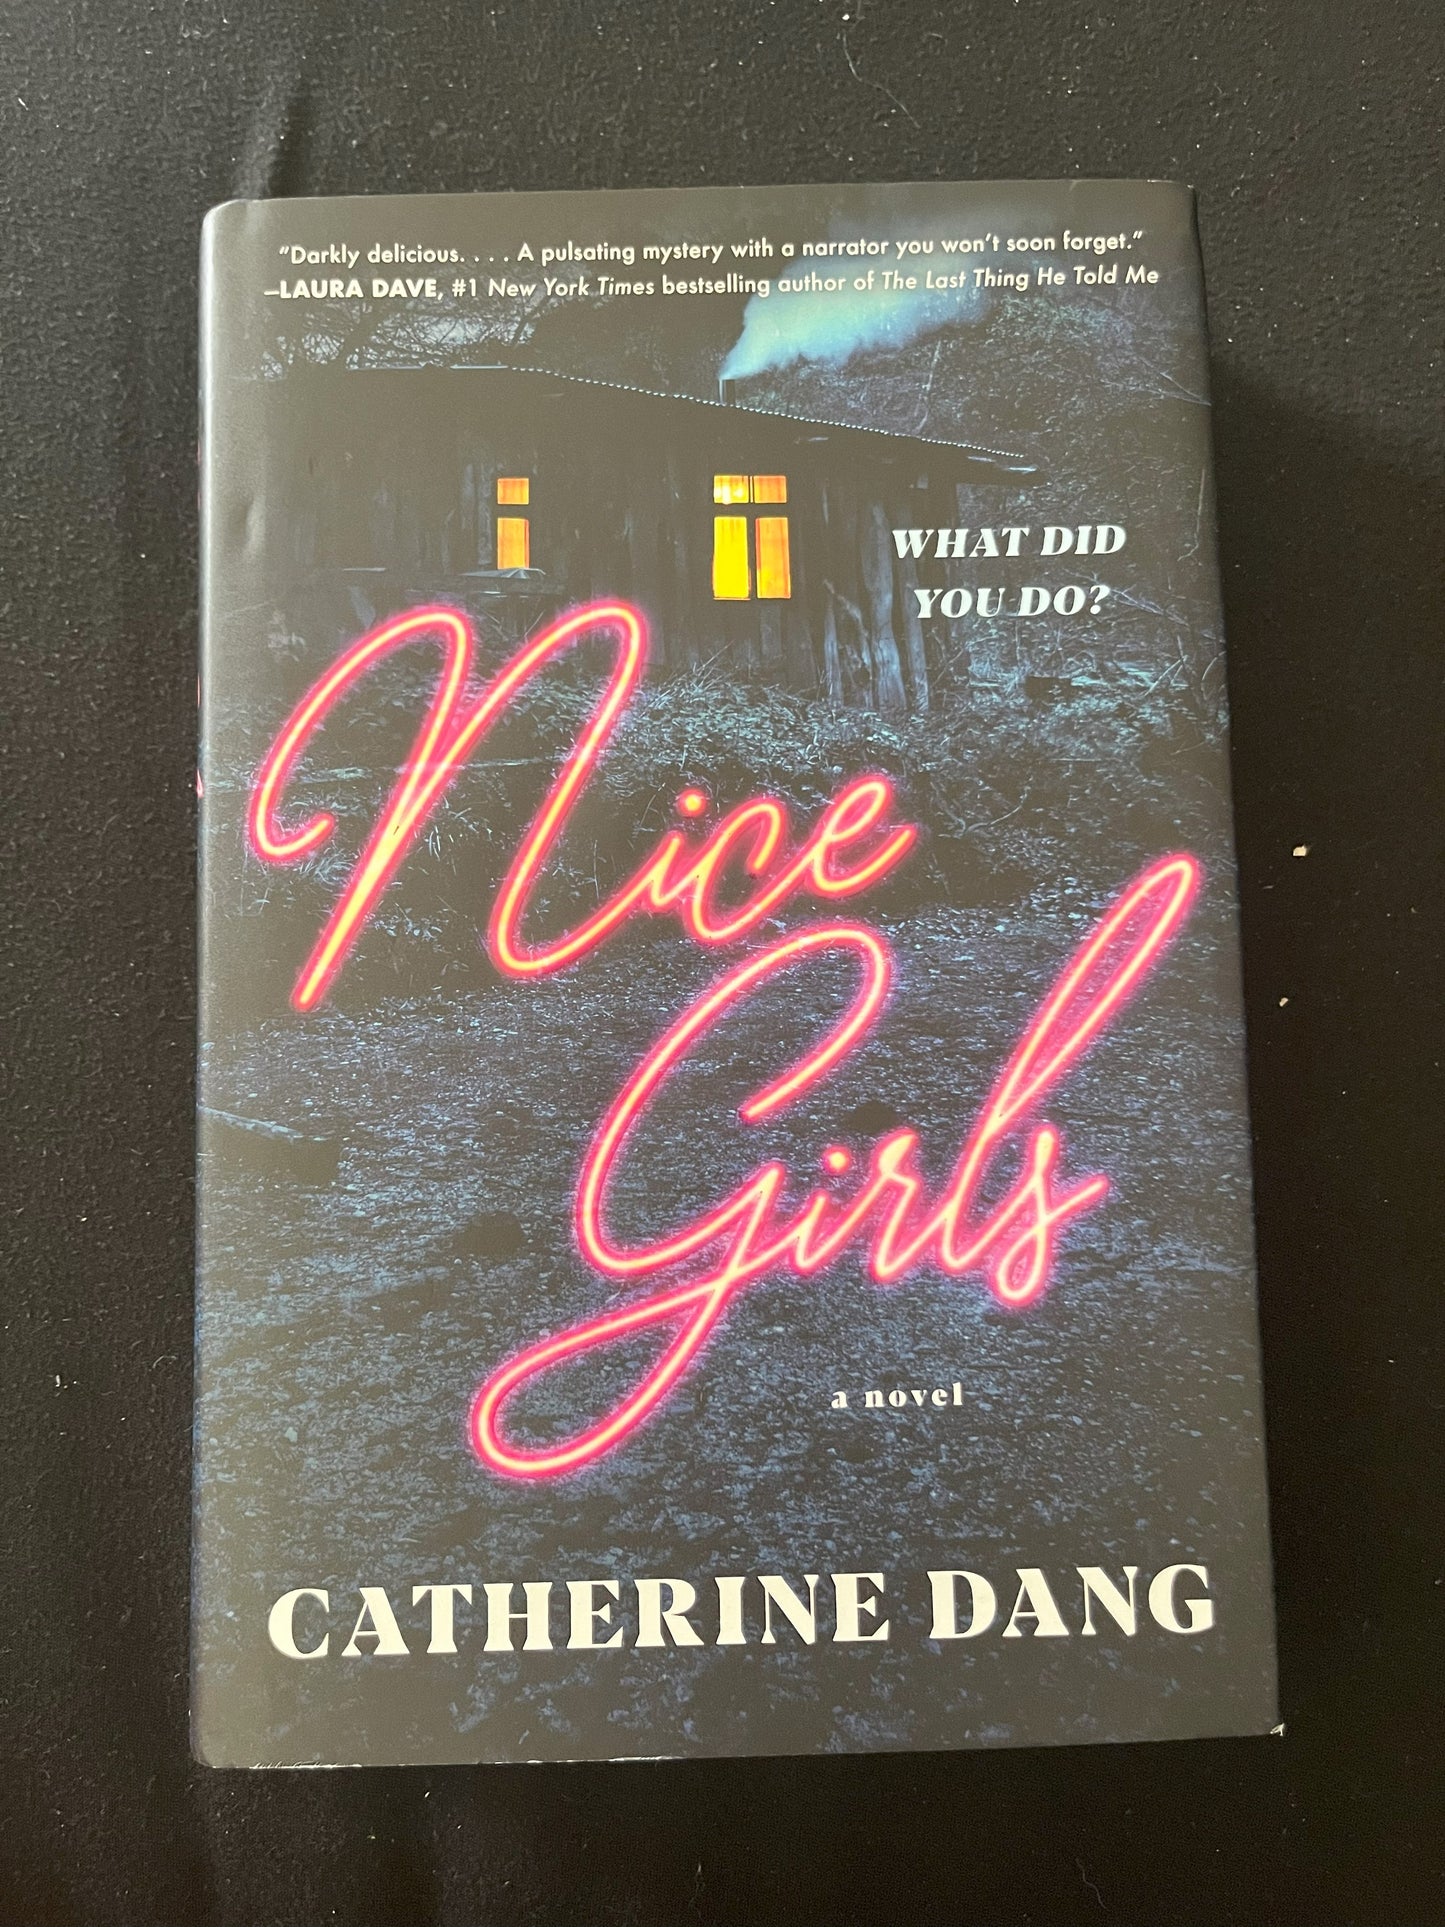 NICE GIRLS by Catherine Dang